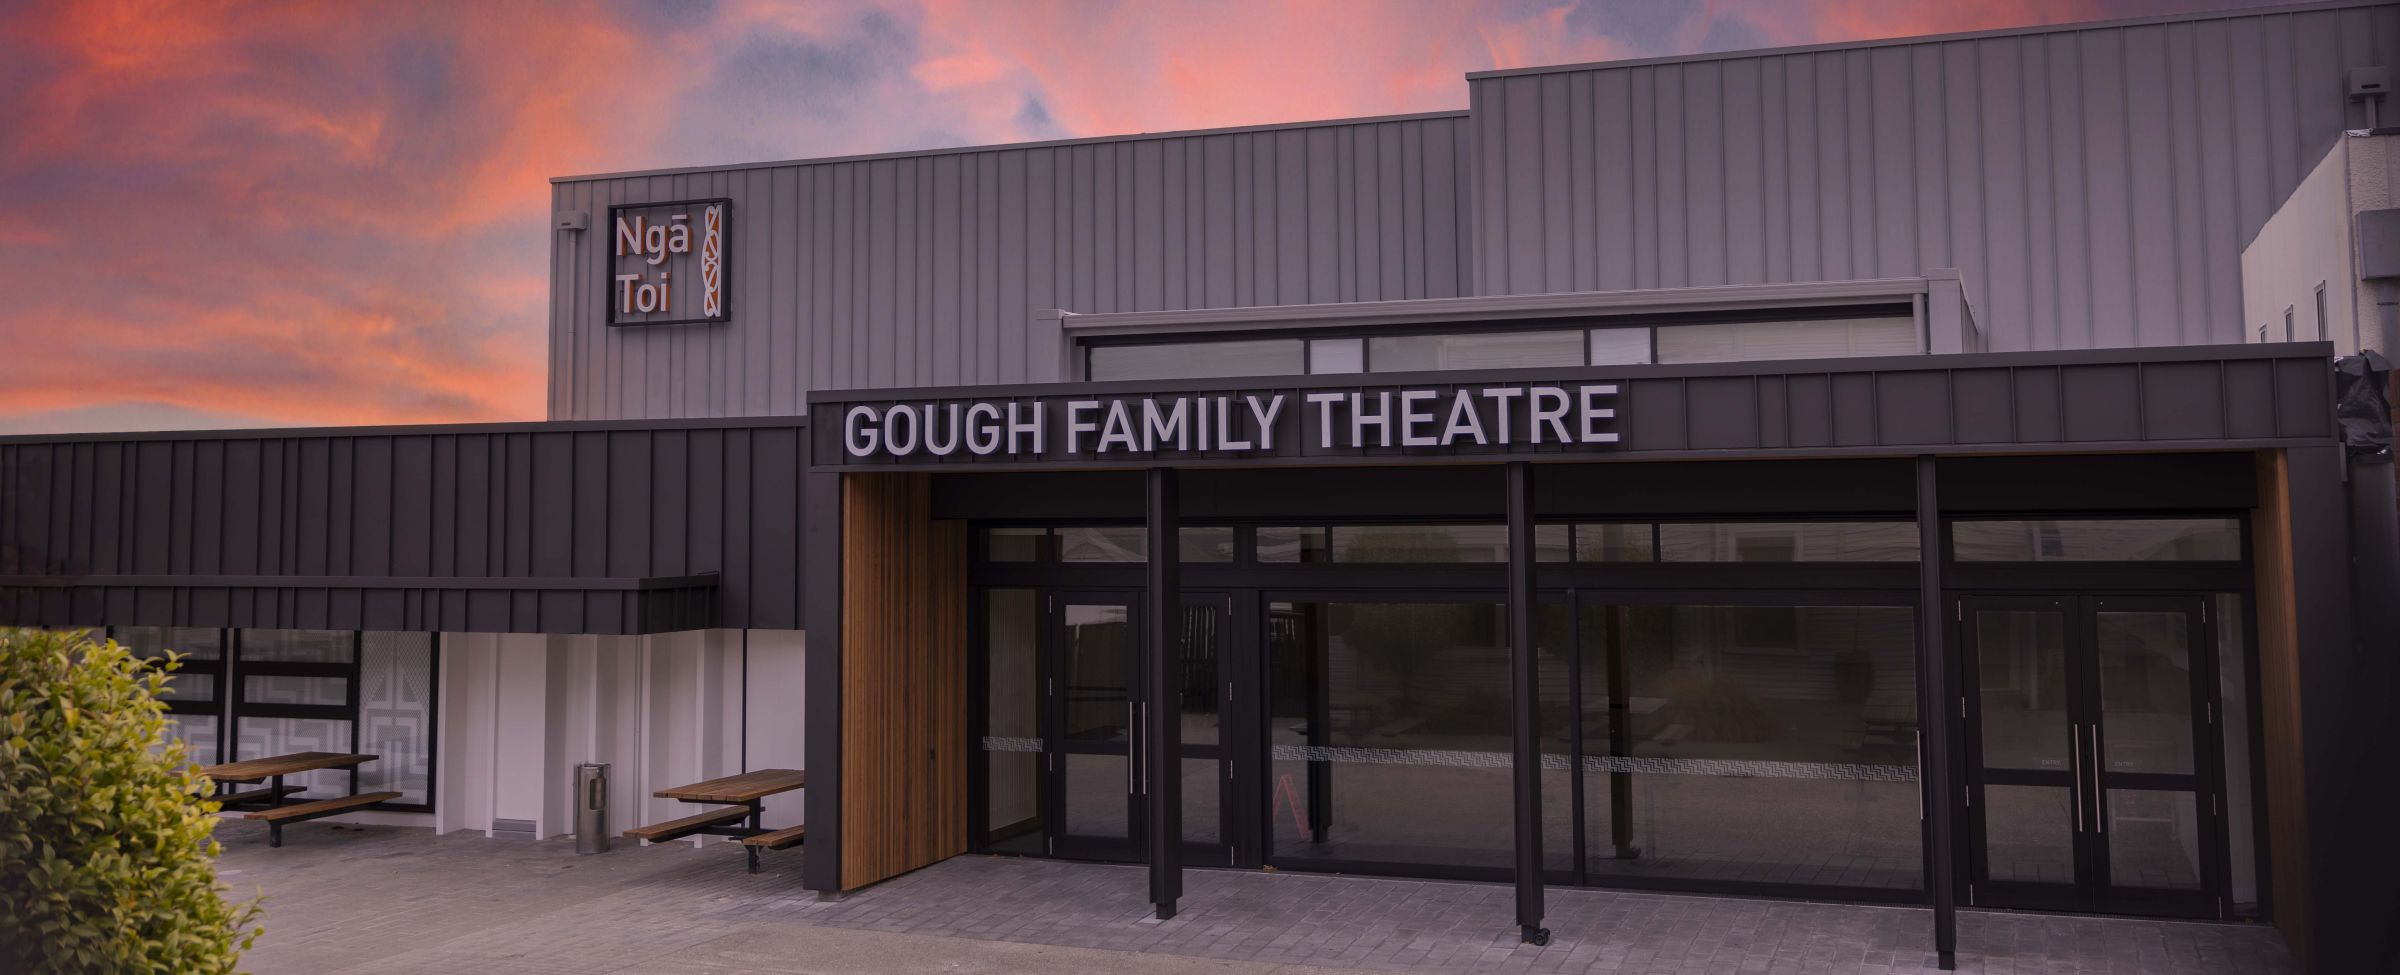 Nga Toi Gough Family Theatre facade